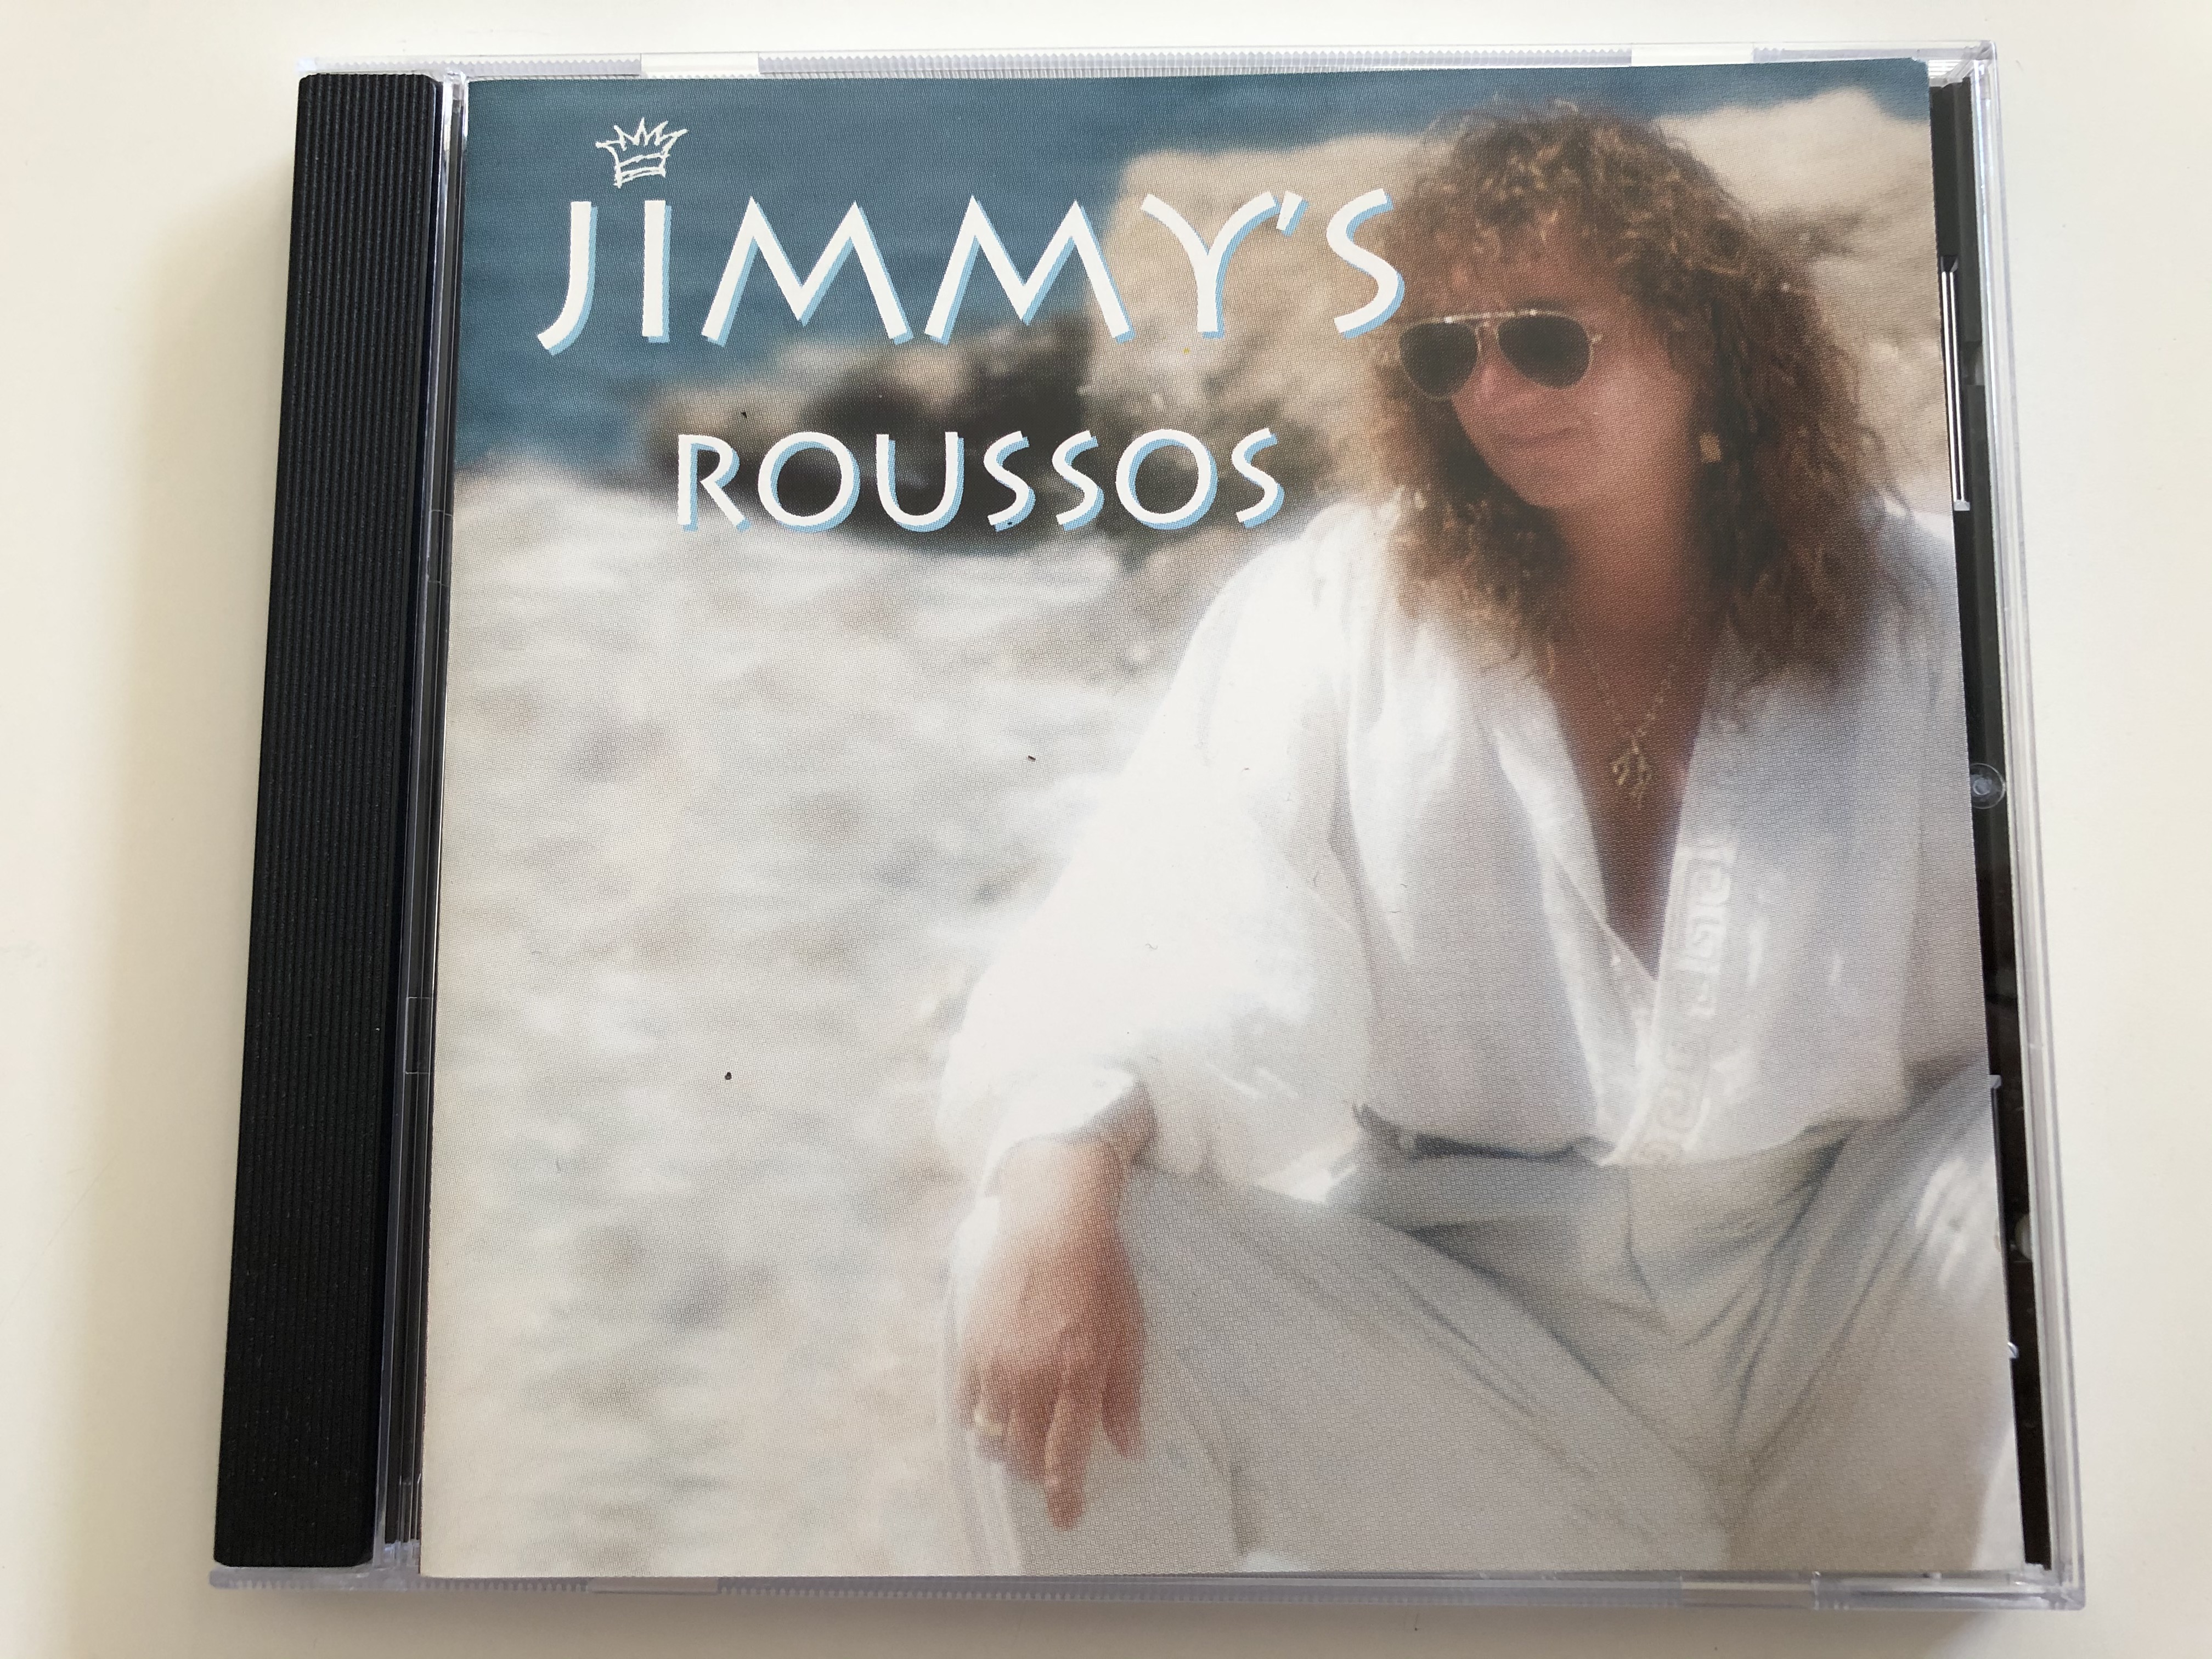 jimmy-s-roussos-magneoton-audio-cd-1994-4509-98571-2-1-.jpg